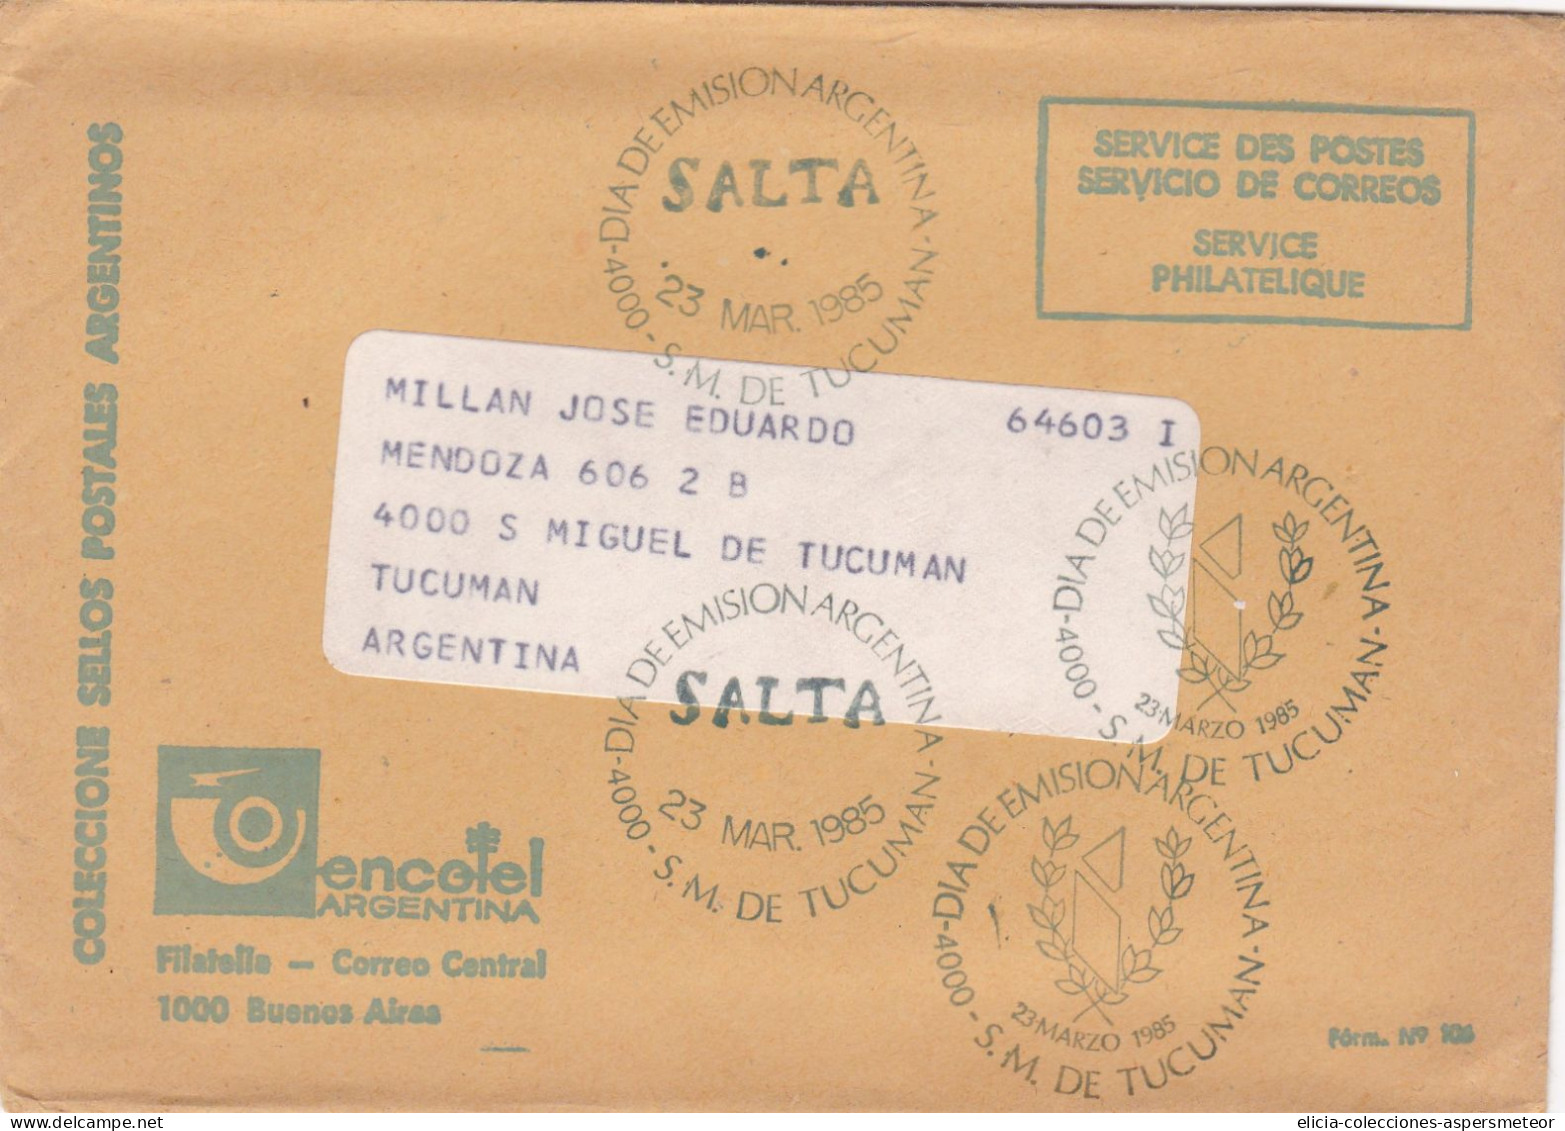 Argentina - 1985 - Booklet - Collection Of Argentine Postage Stamps ENCOTEL - Philatelique Service  - Caja 30 - Carnets